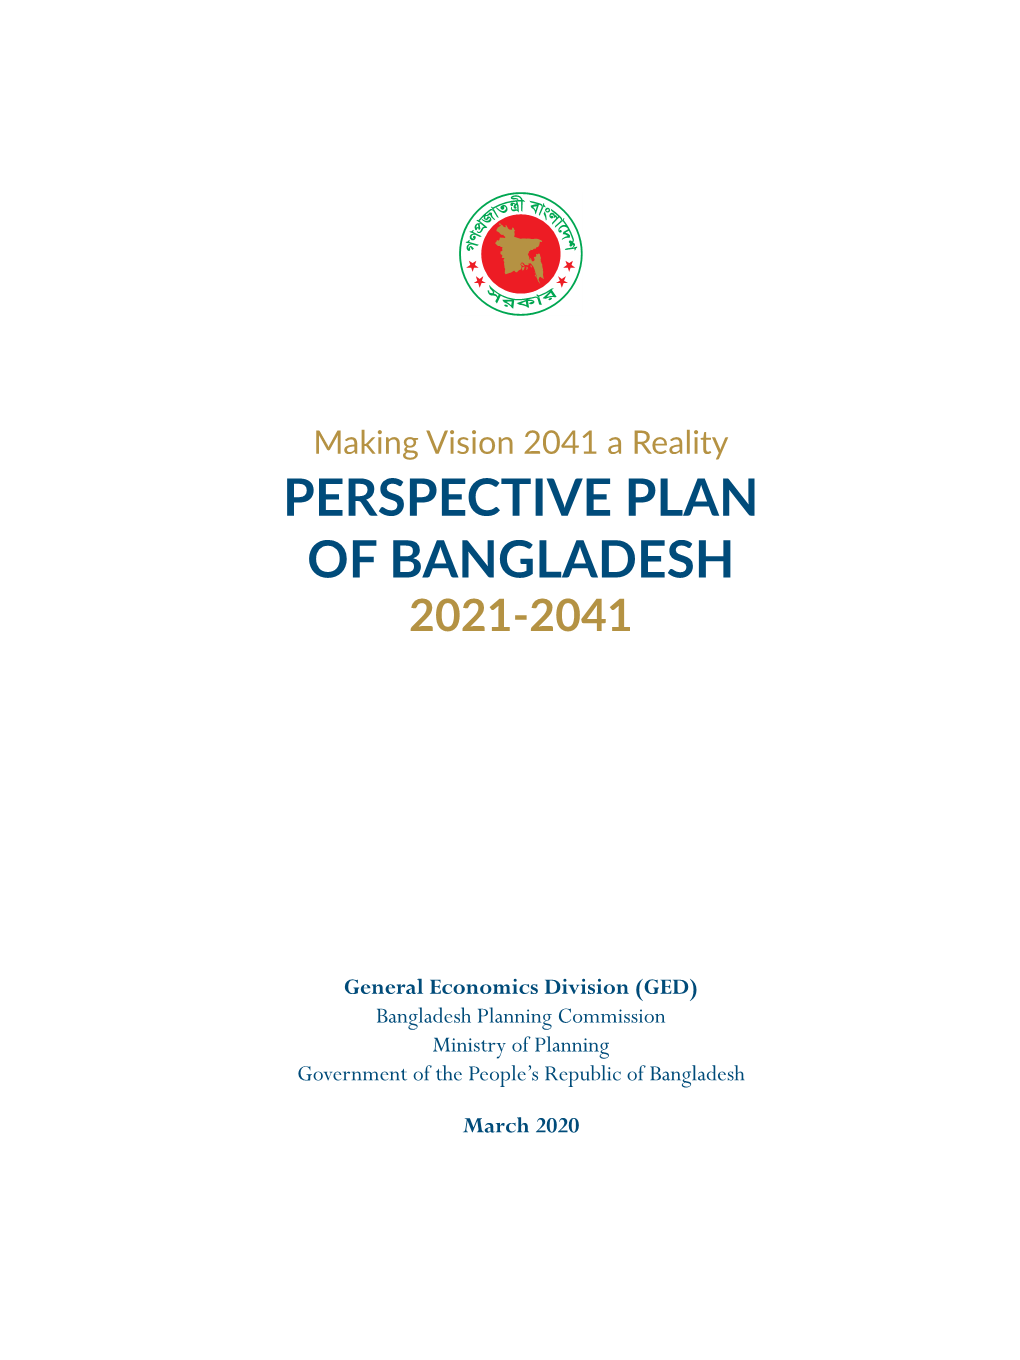 Perspective Plan of Bangladesh 2021-2041